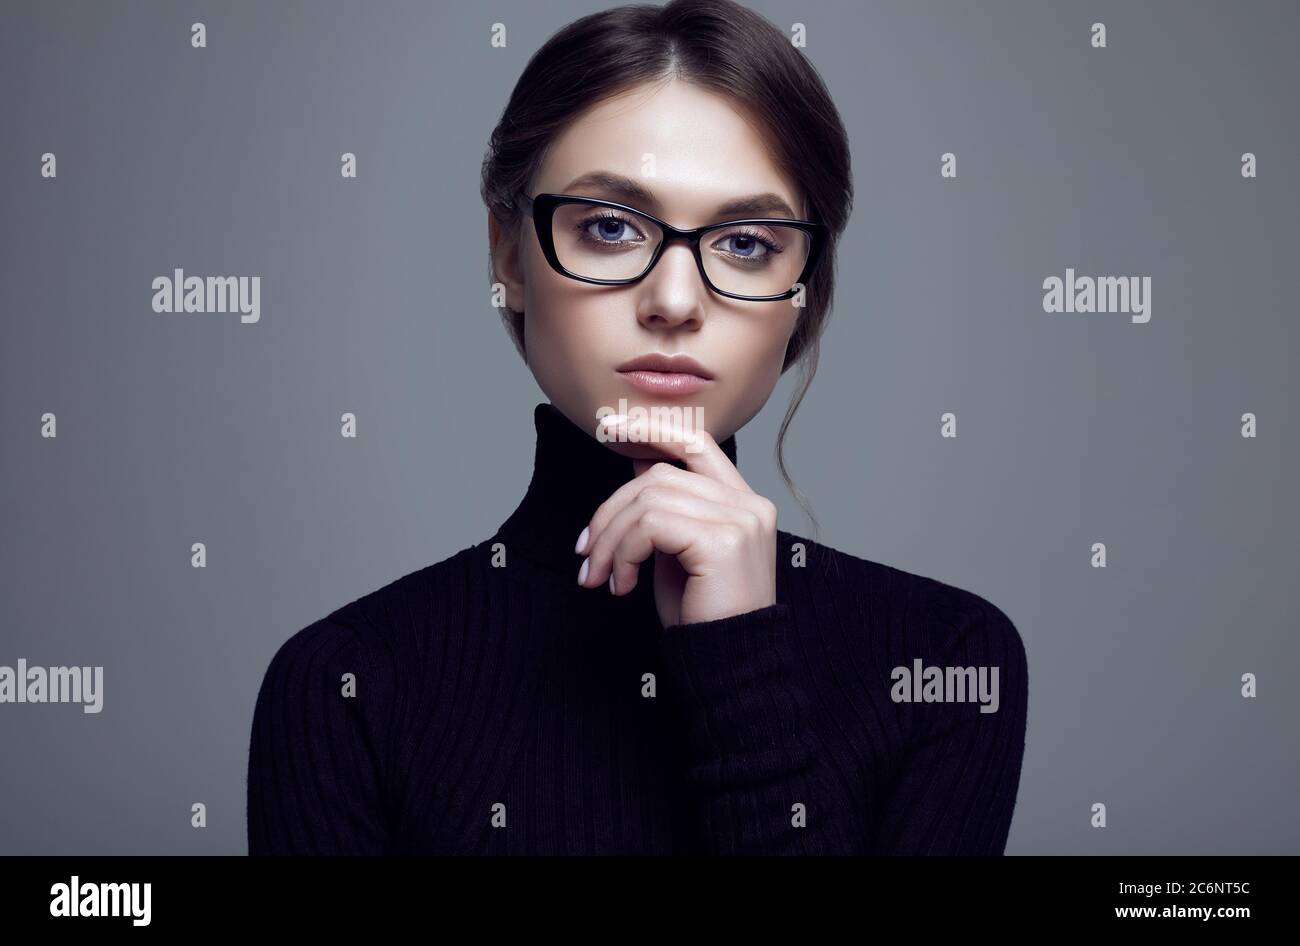 Portrait of cute student girl wearing black turtleneck sweater and stylish eyeglasses posing on gray background in studio Stock Photo